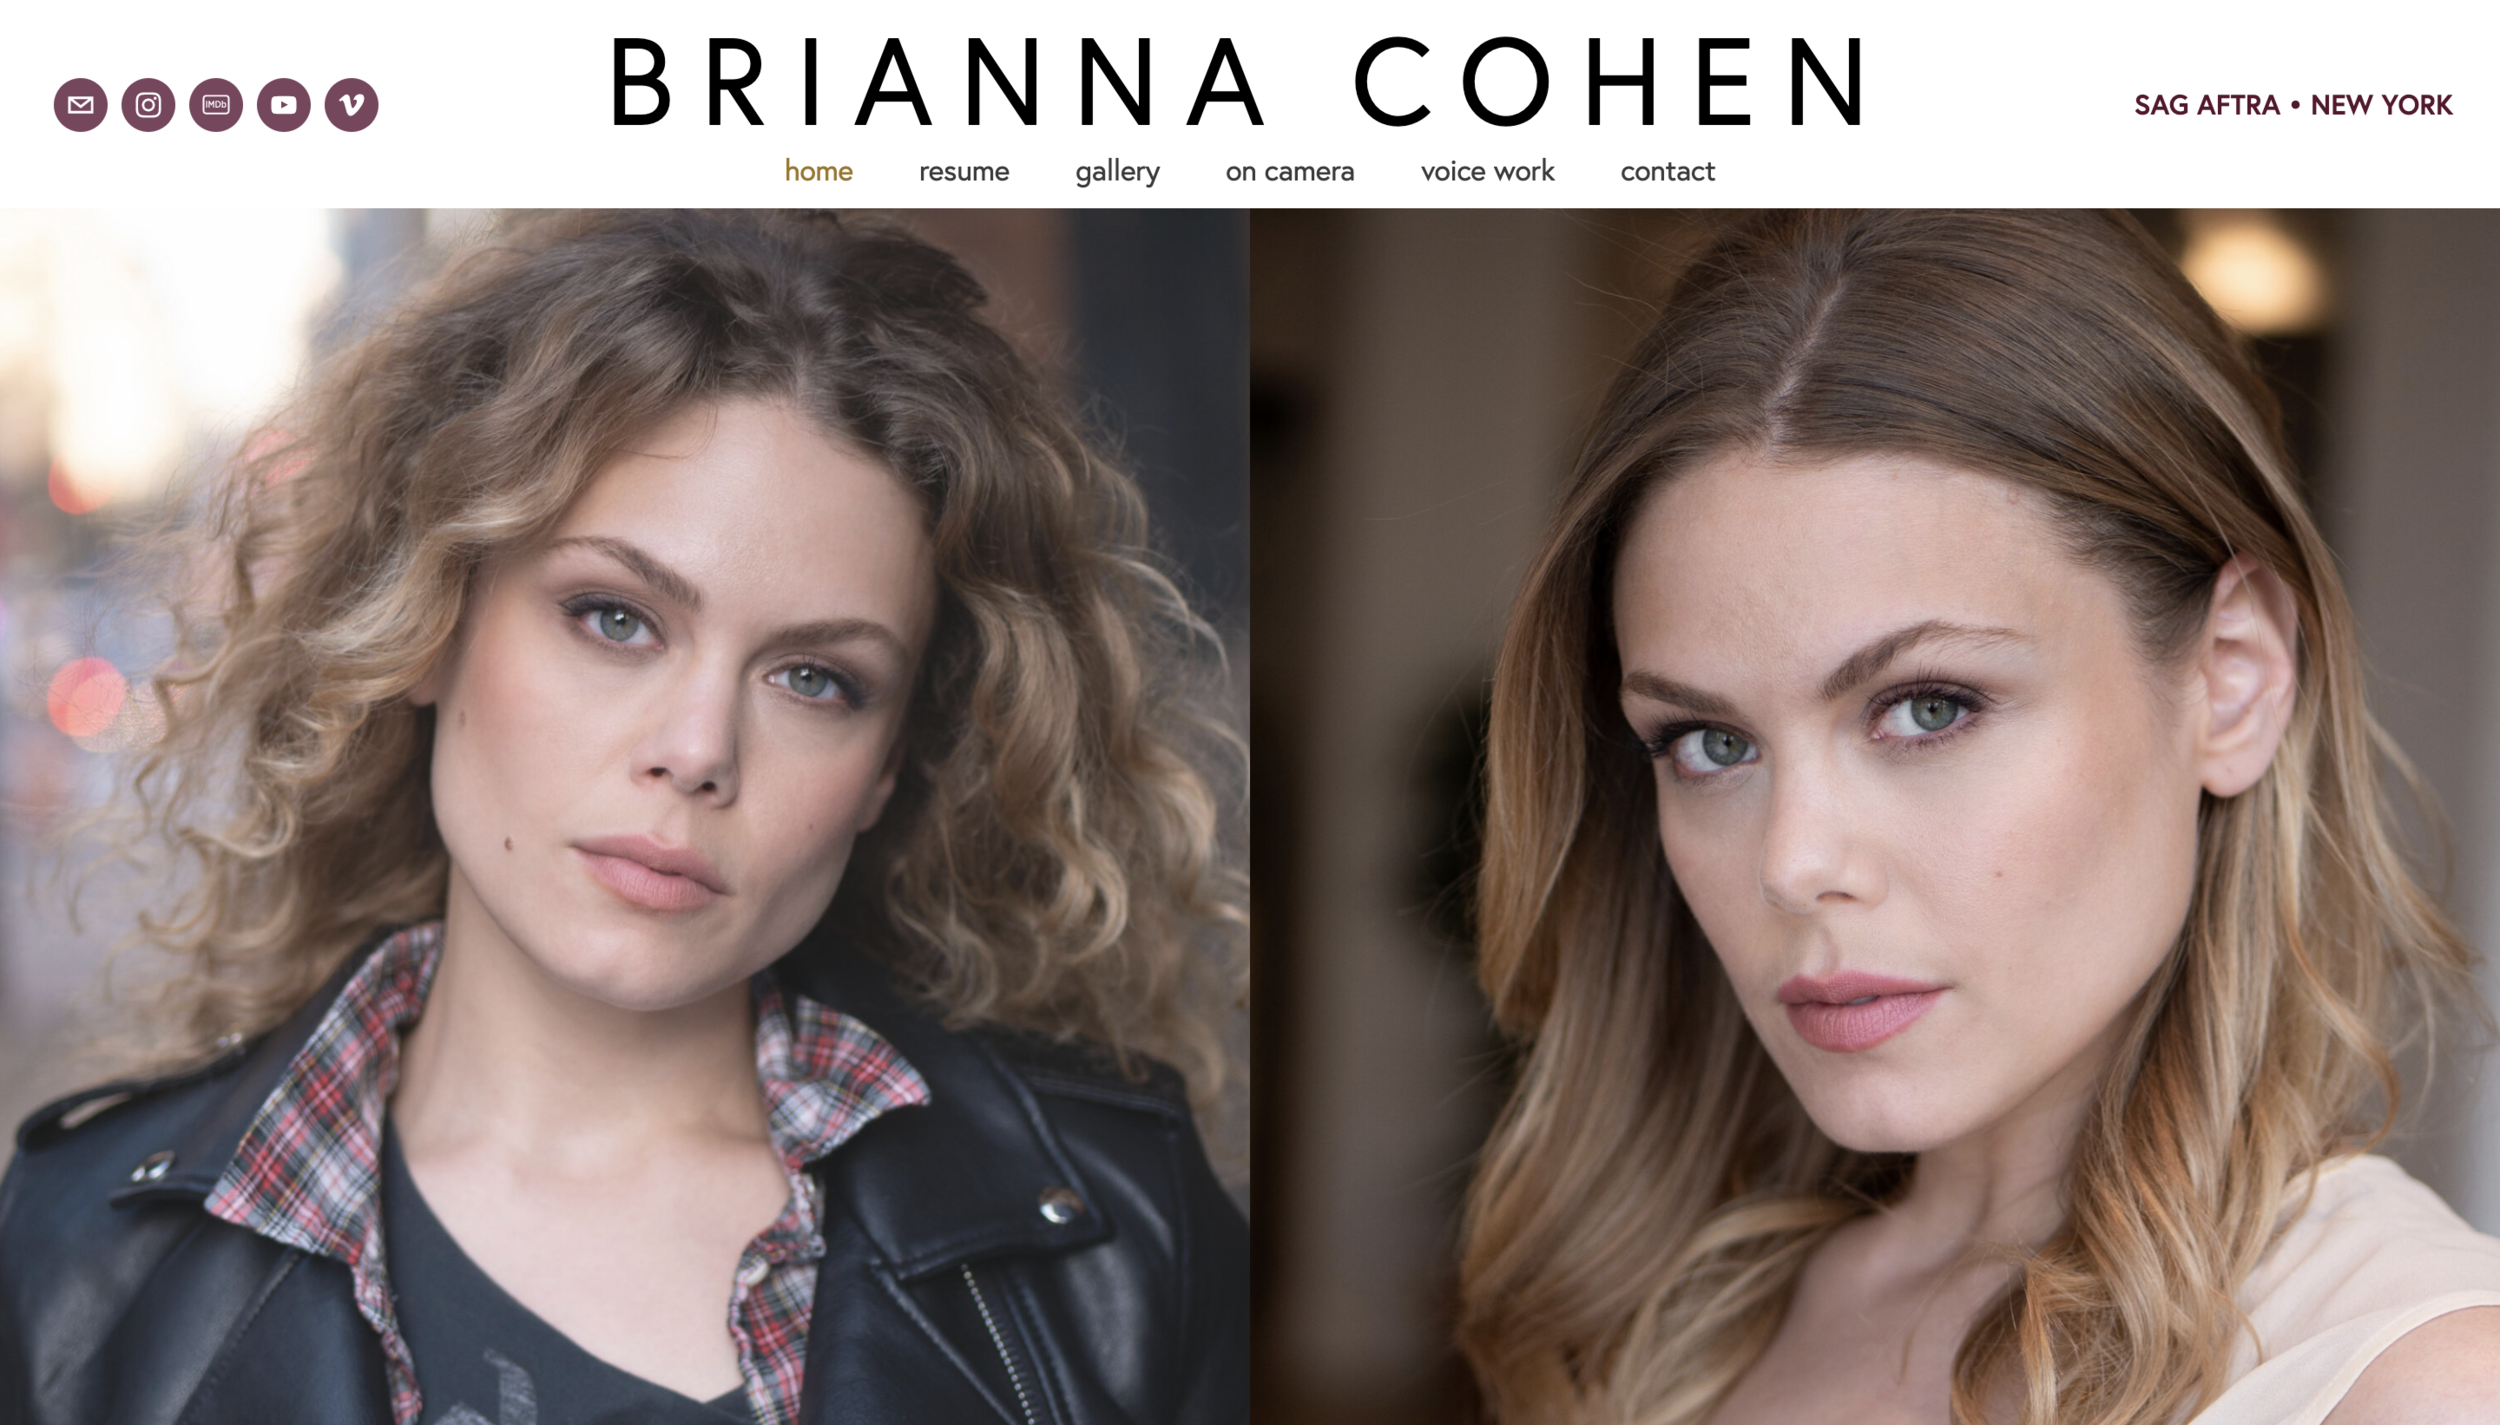 Brianna Cohen